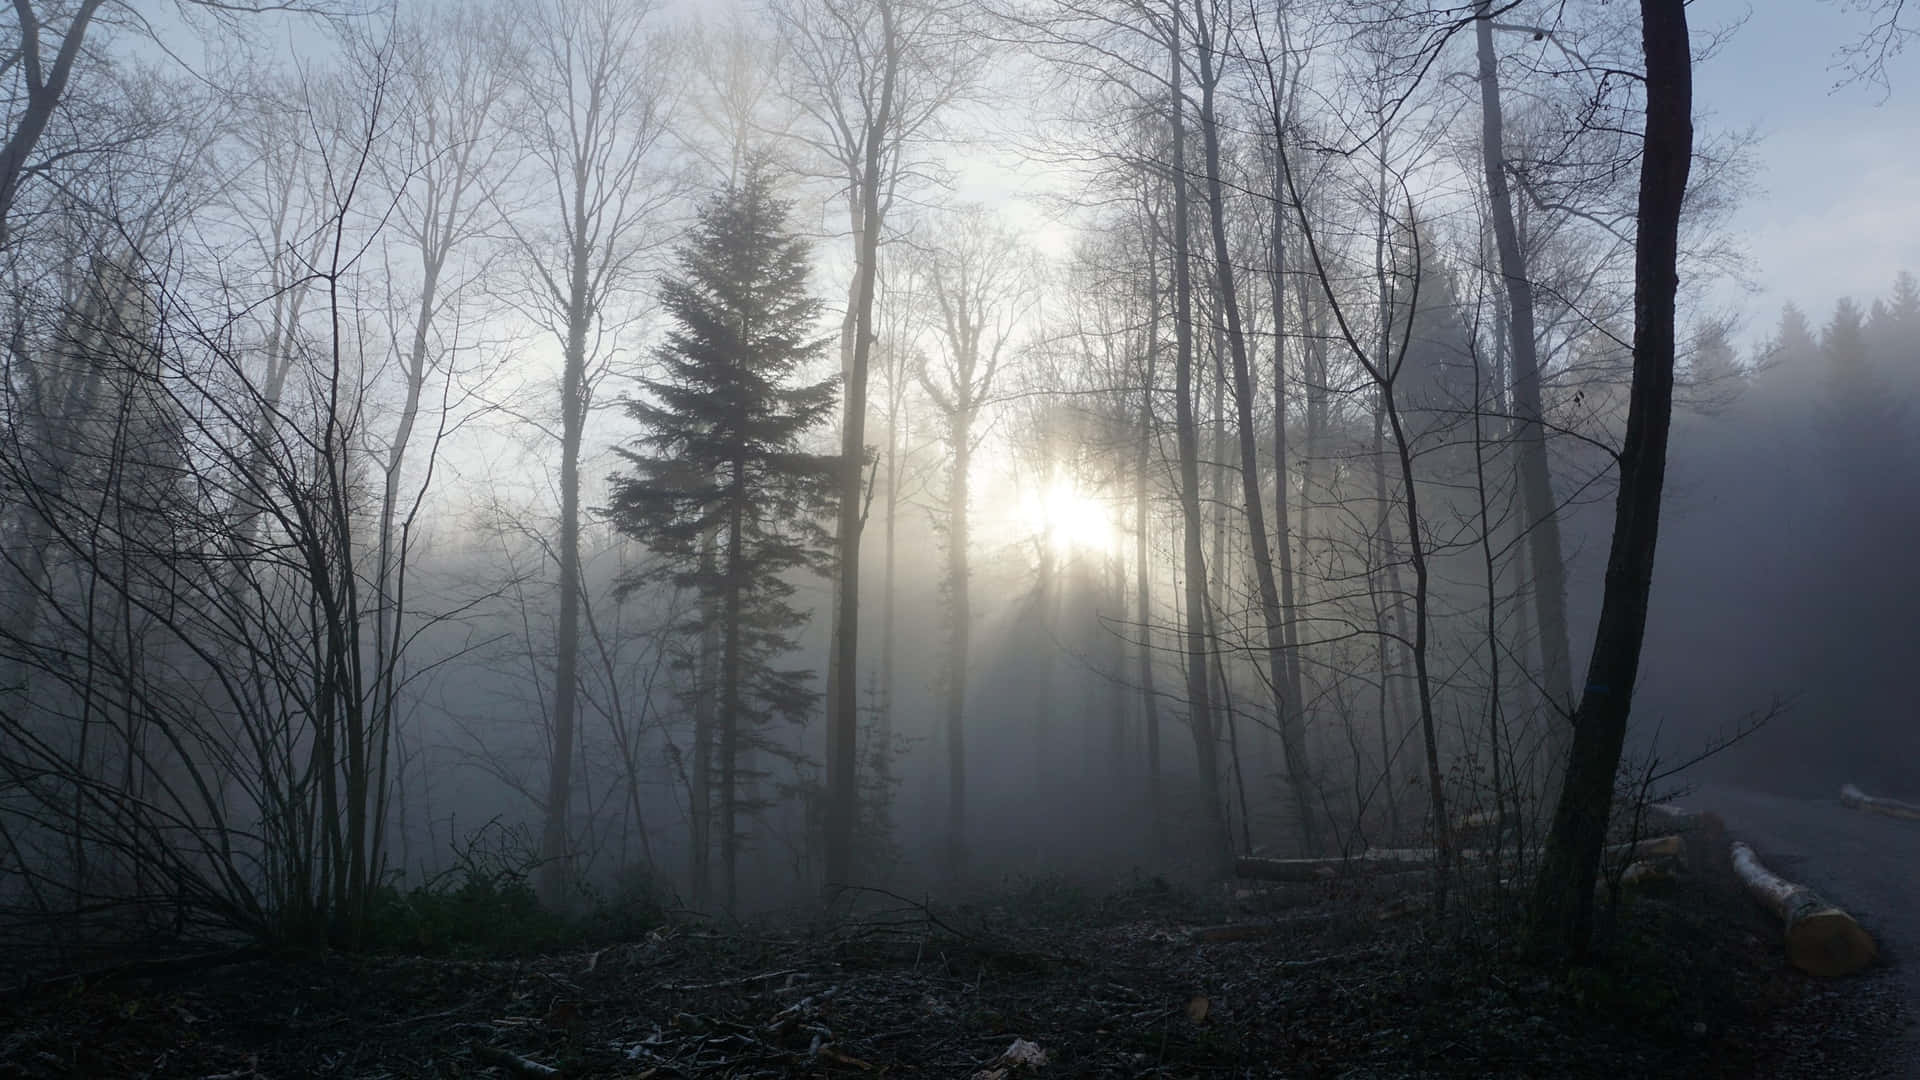 An eerie, foggy landscape